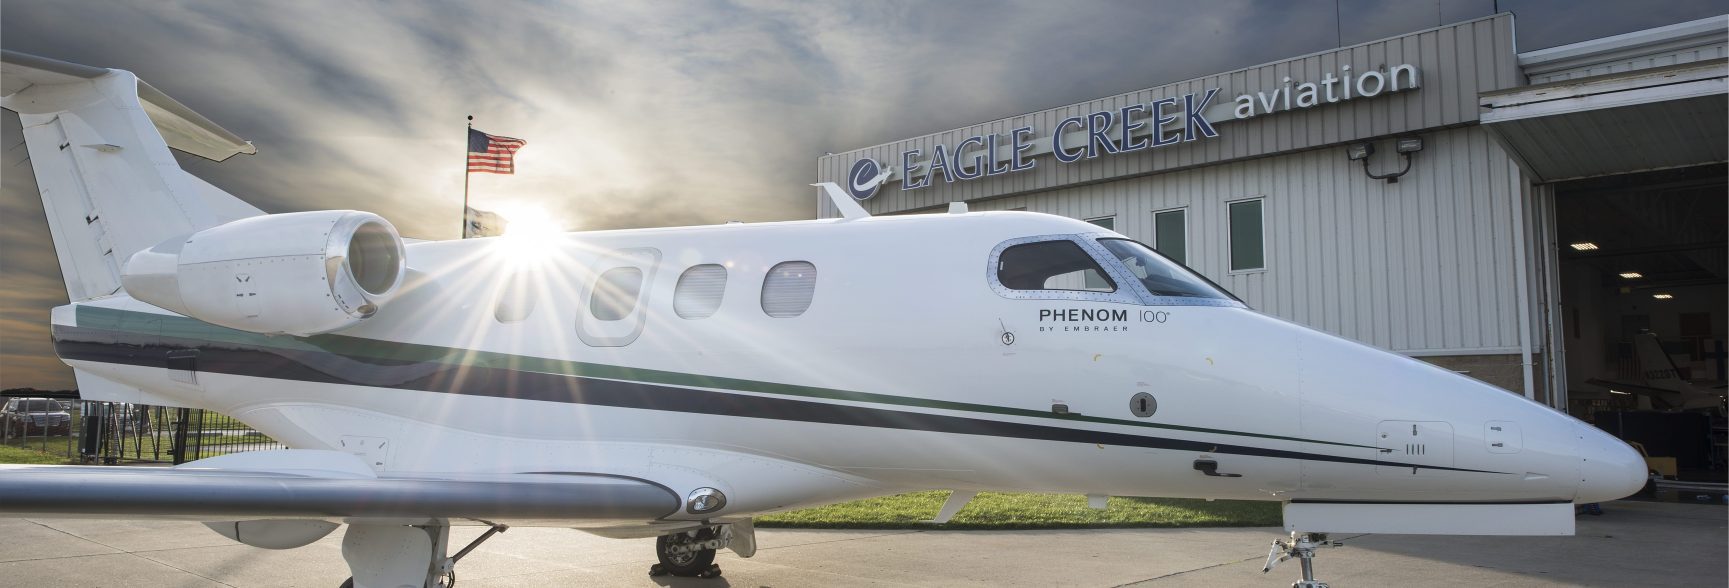 Embraer Phenom Eagle Creek Aviation